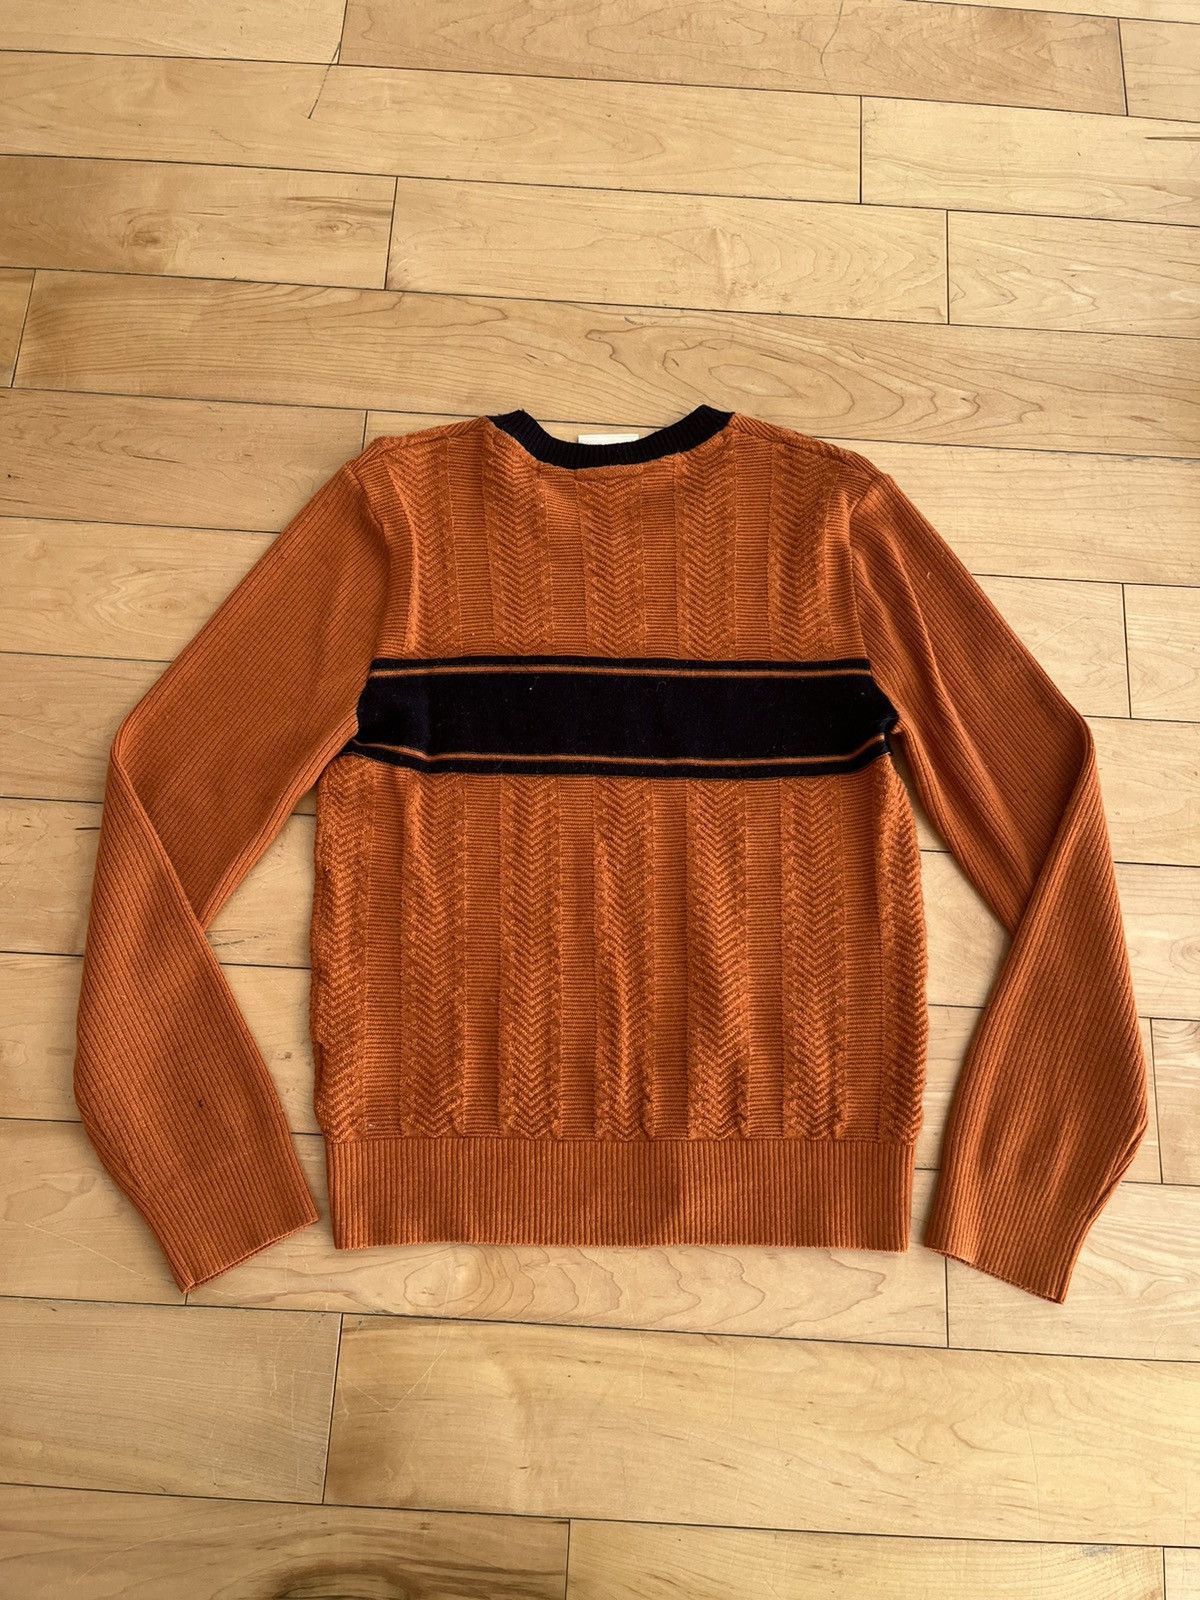 Wales Bonner x Adidas Knit Sweater - 2